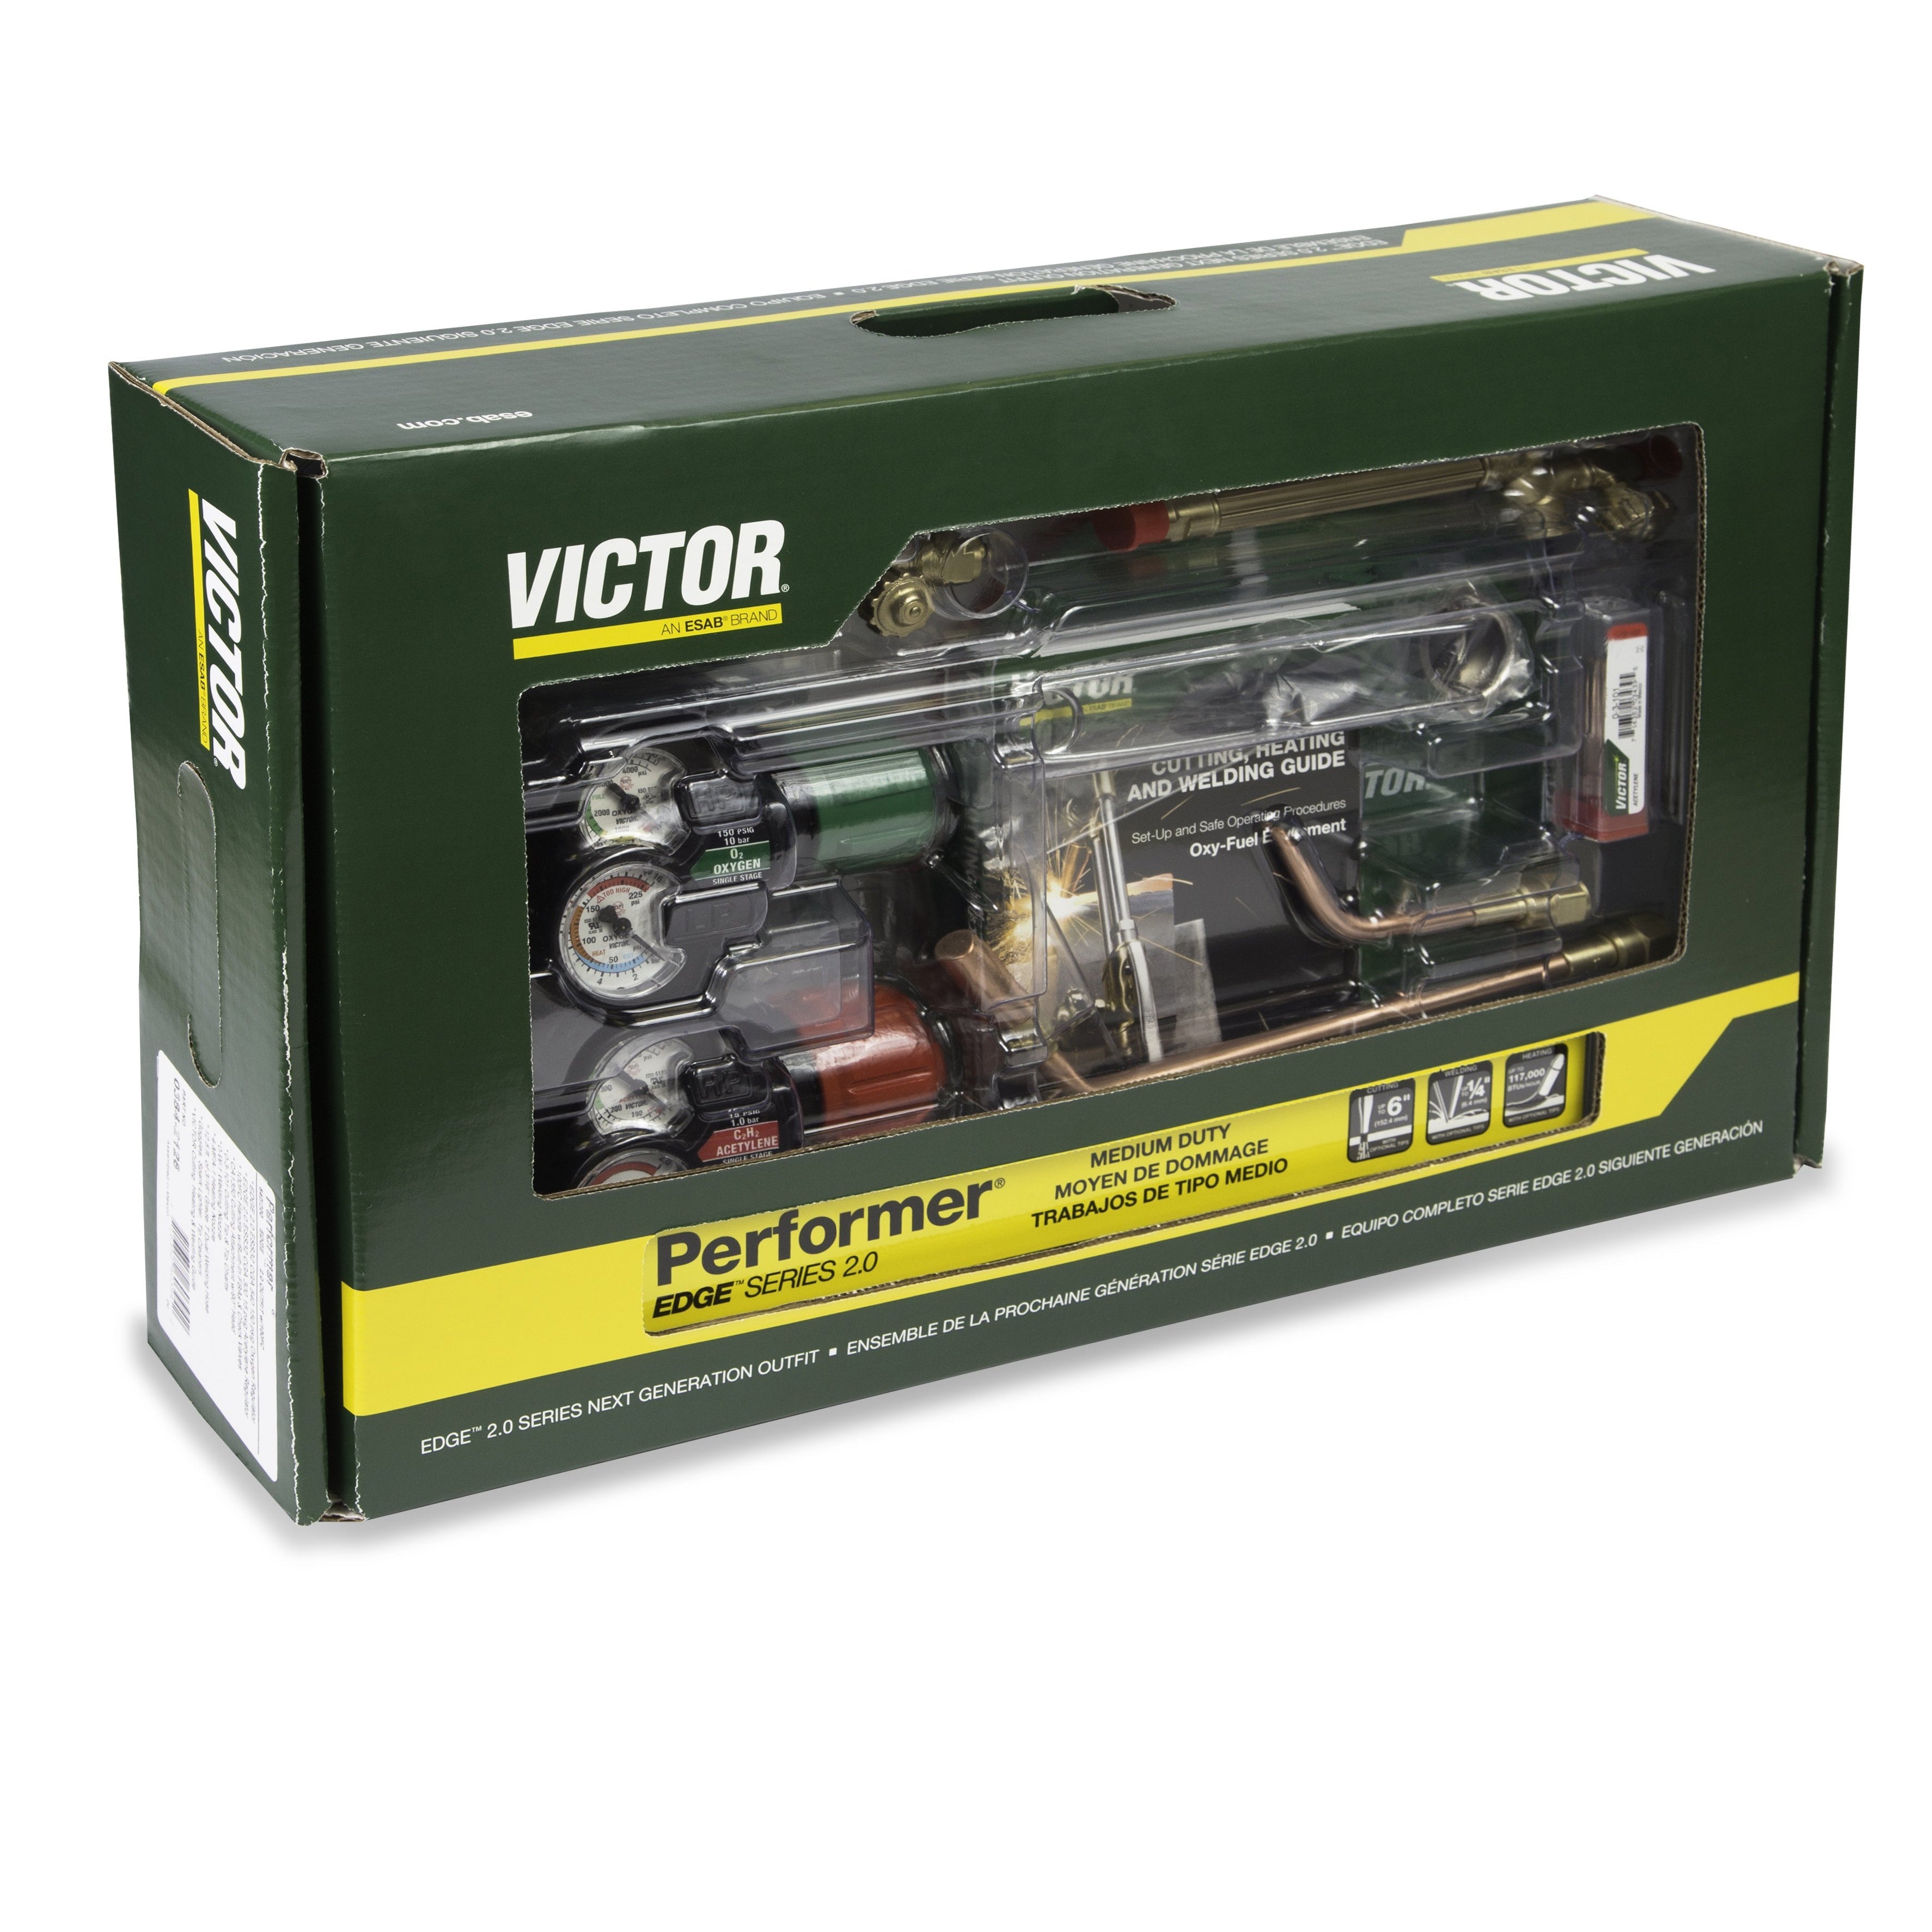 Victor Performer 540/300 Edge 2.0 MD (Acetylene) - 0384-2126